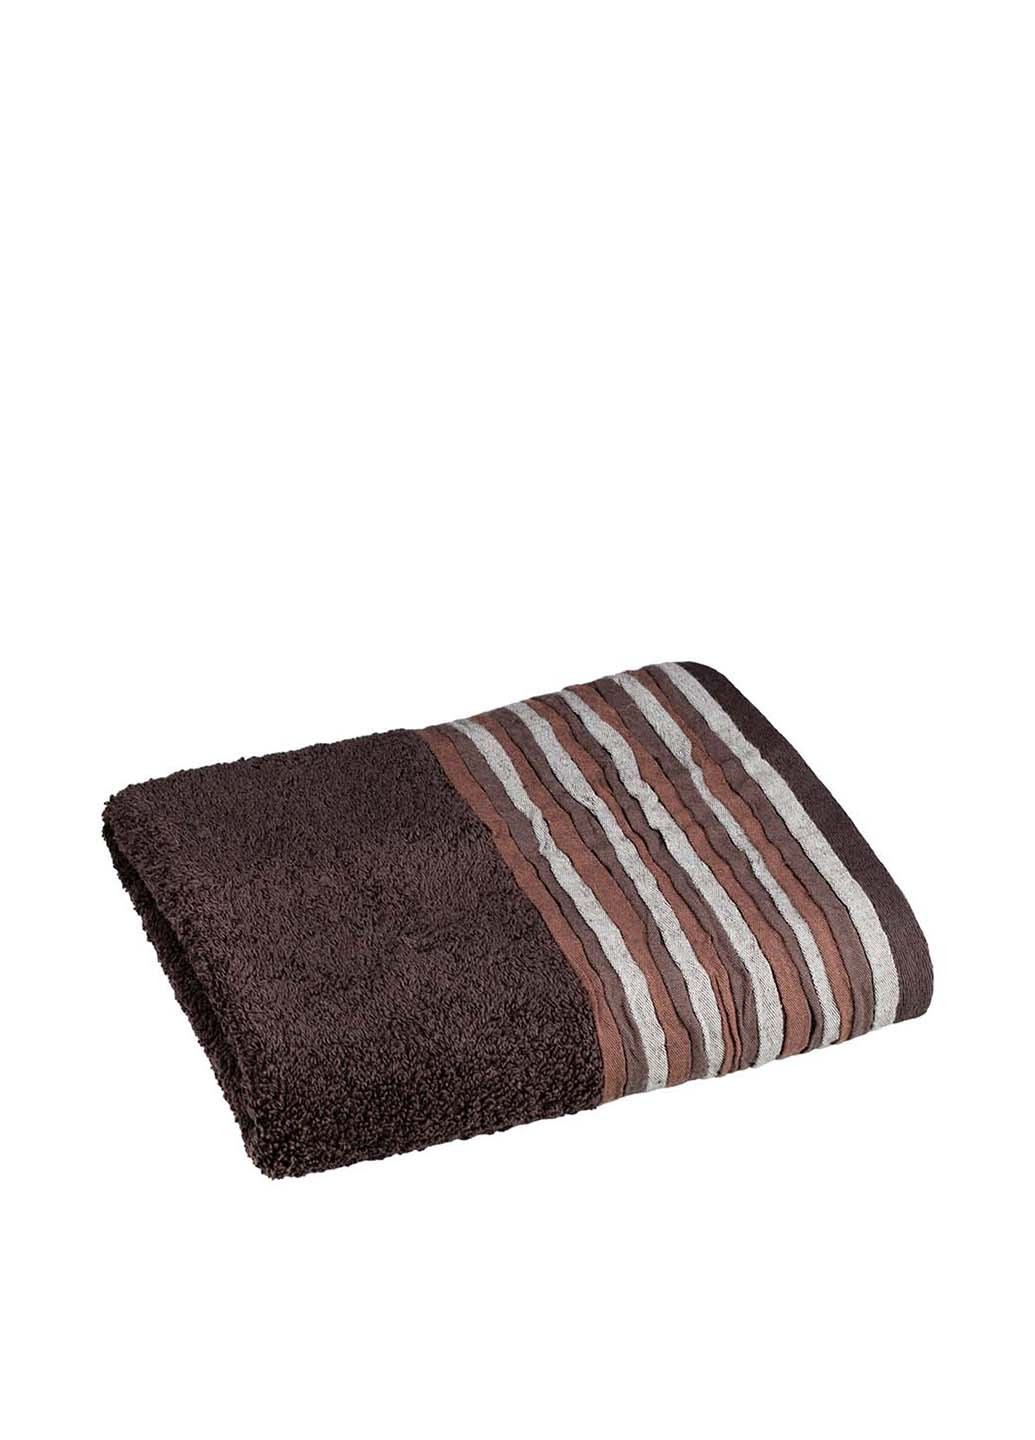 Home Line полотенце, 50х90 см однотонный коричневый производство - Турция